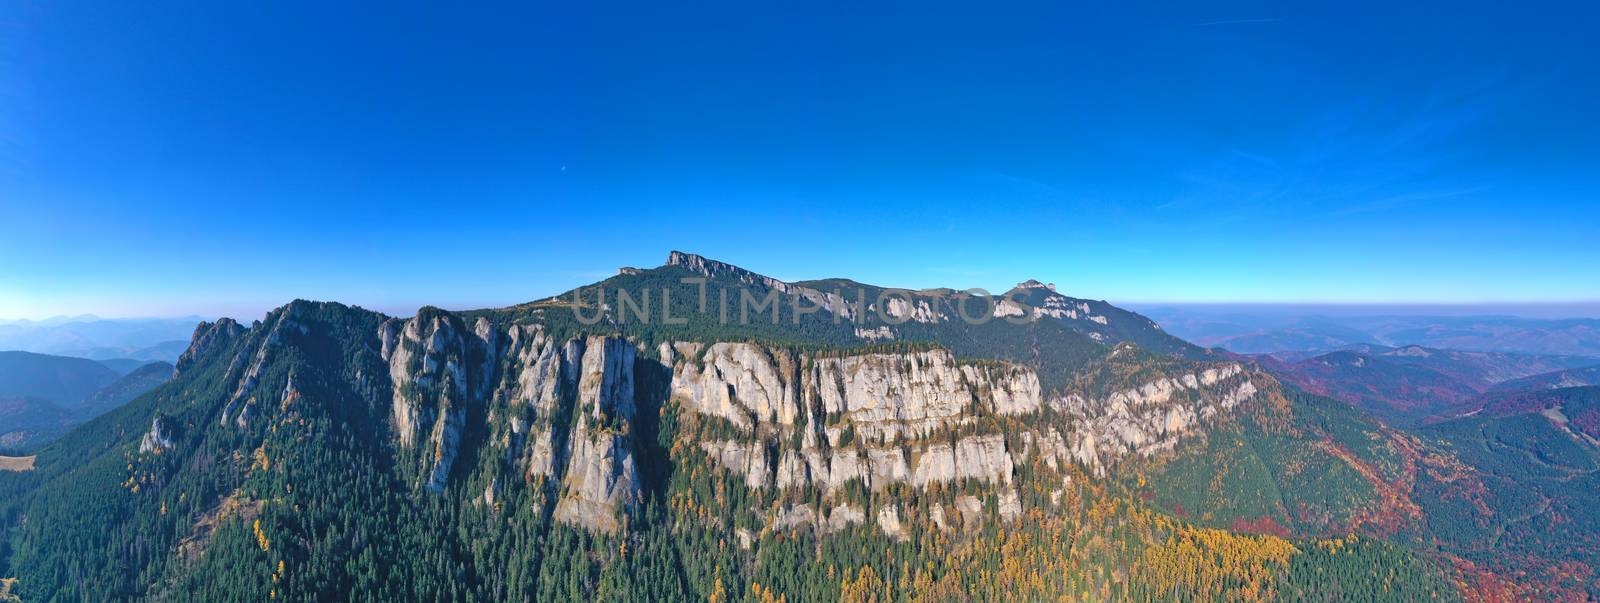 Autumn mountain panorama by savcoco